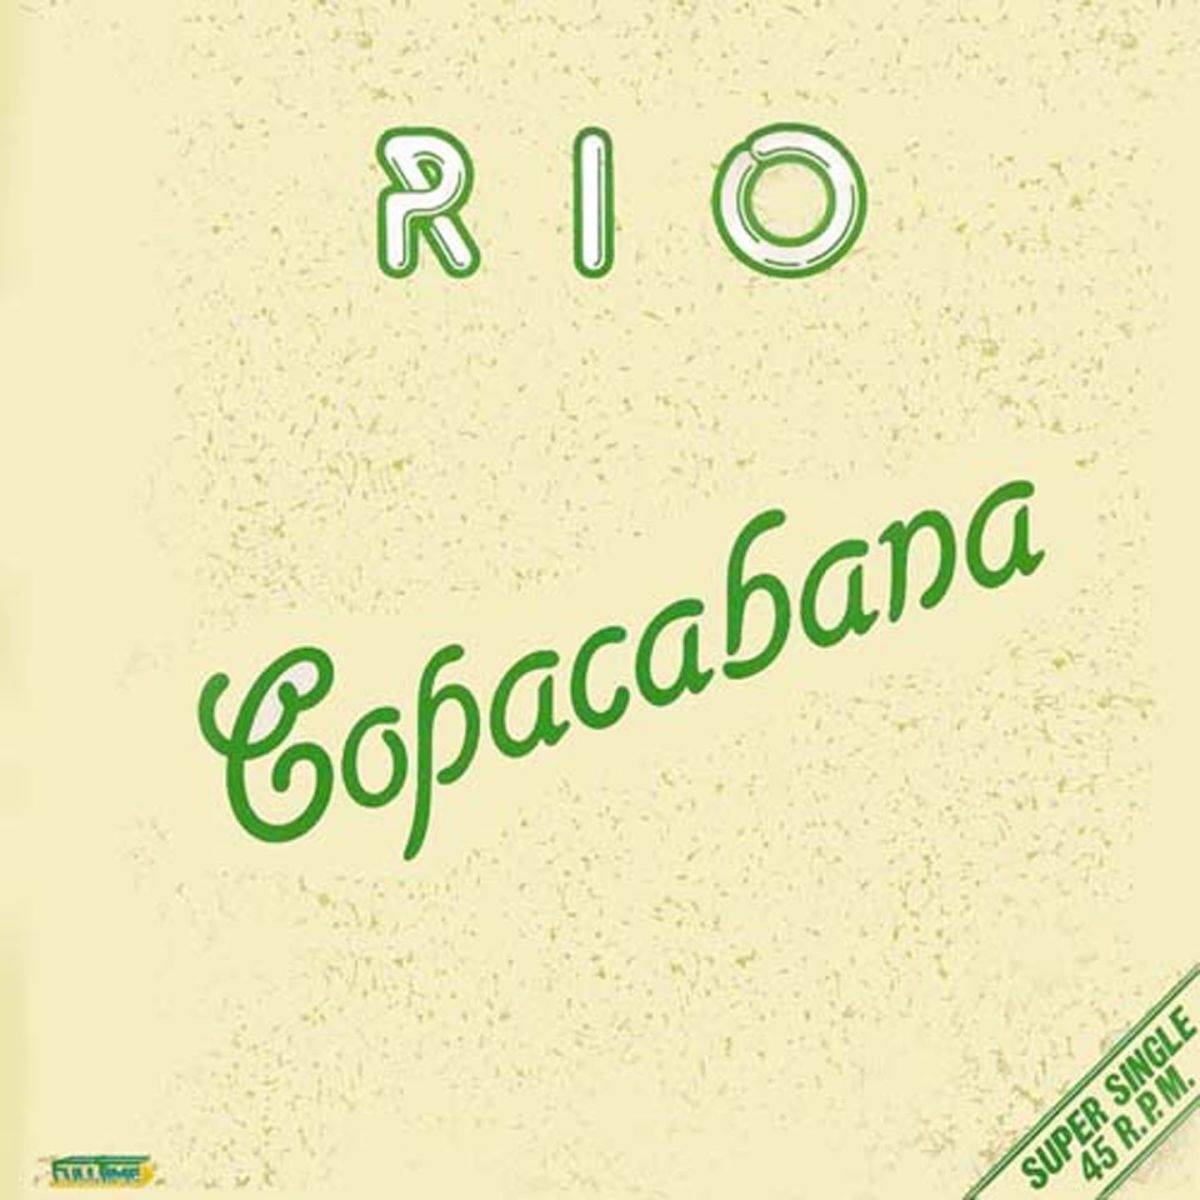 Rio - Copacabana / Full Time Production